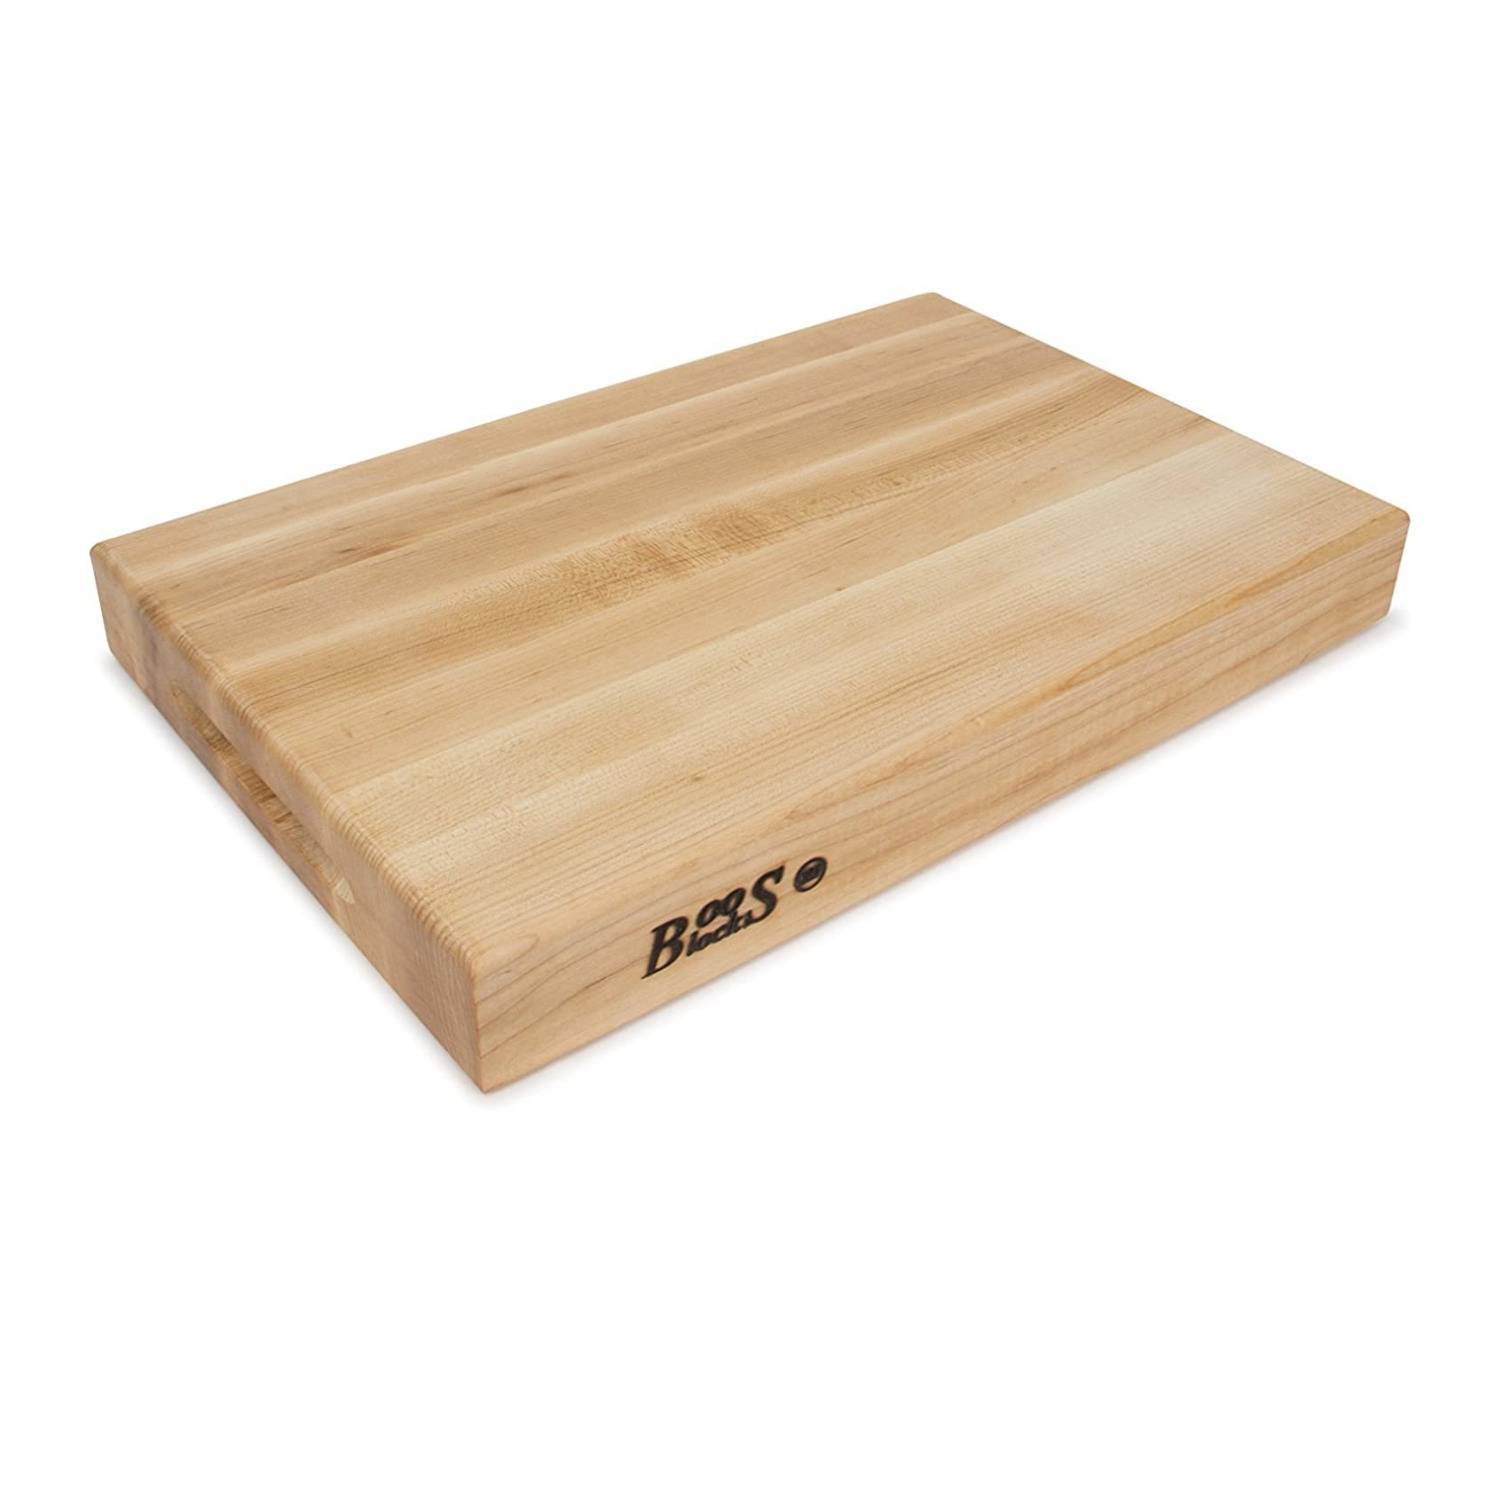 John Boos Block RA03 Maple Wood Edge Grain Reversible Cutting Board (24 x 18 x 2.25 Inches)